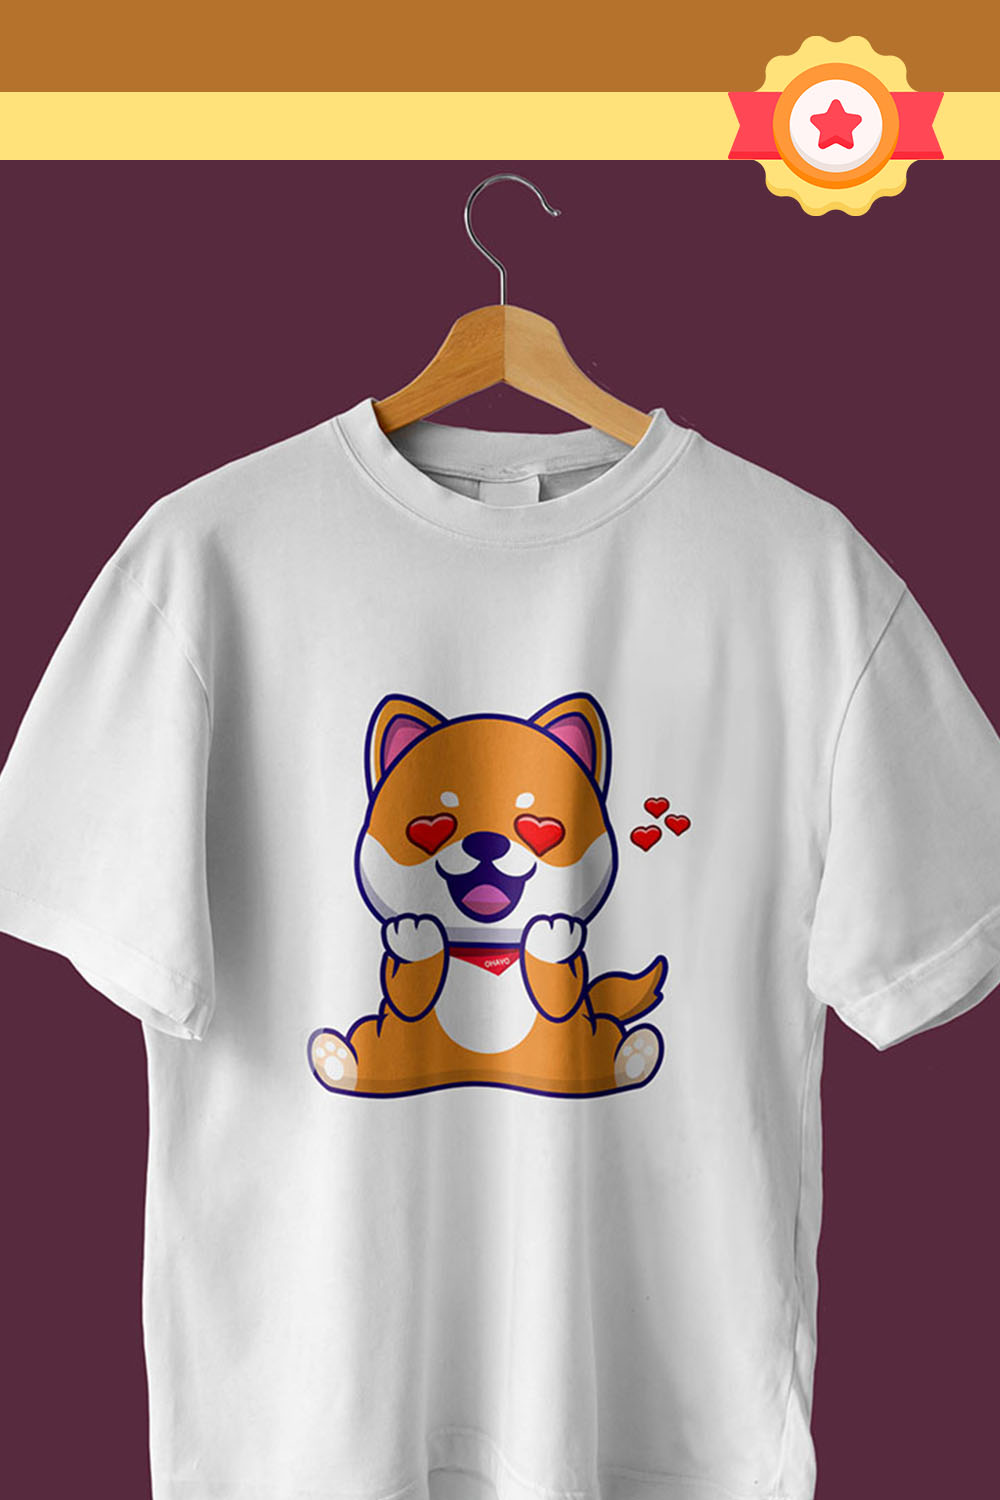 T-shirt Design Cute Dog Love Illustration pinterest image.